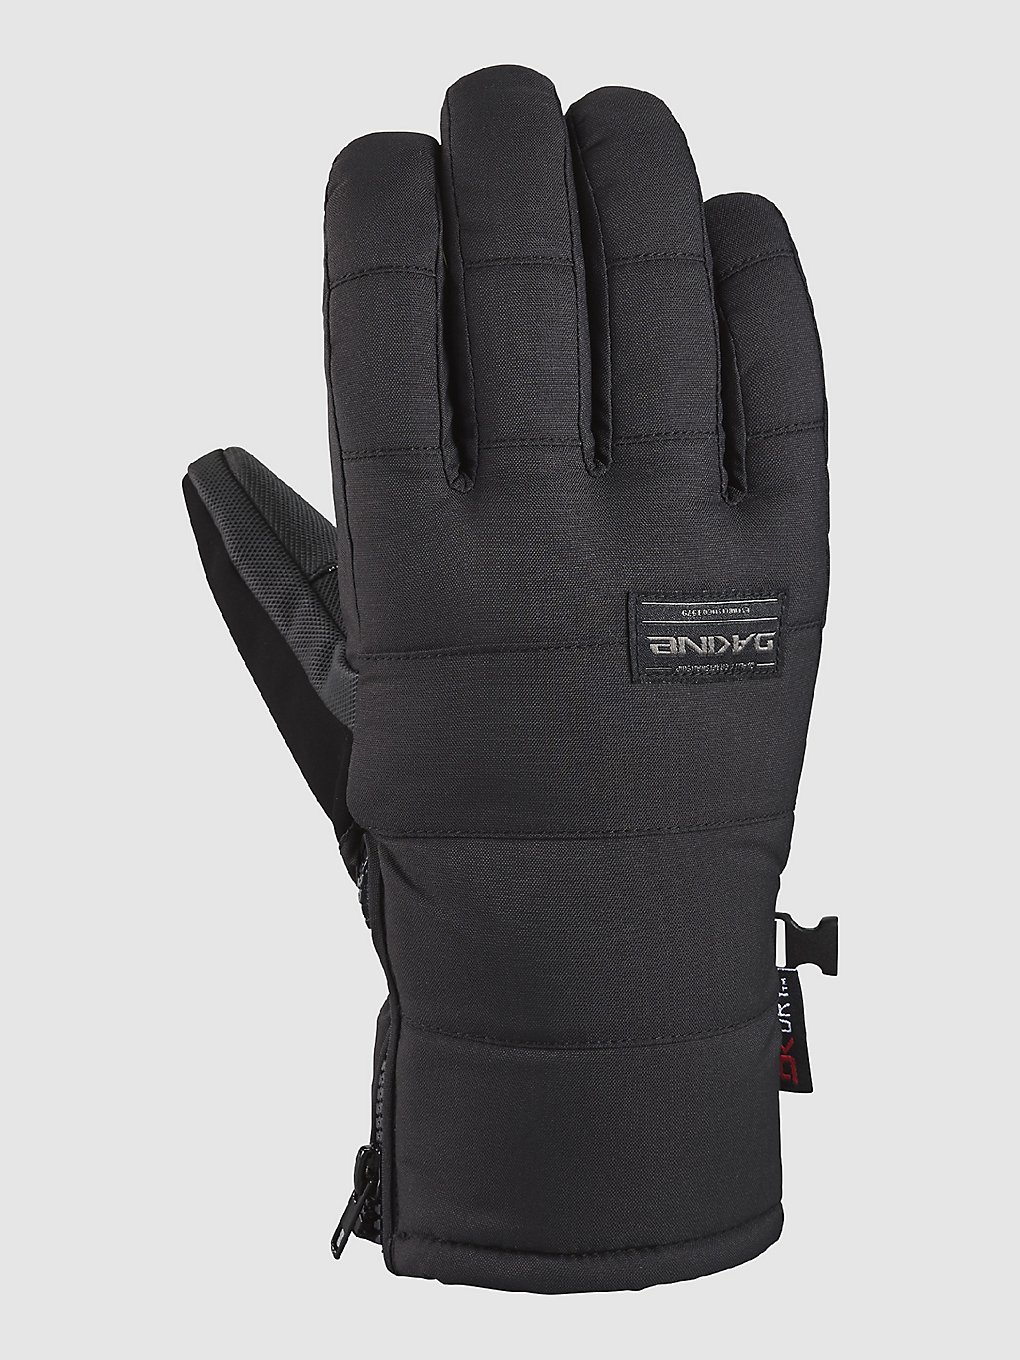 Dakine Omega Handschuhe black kaufen